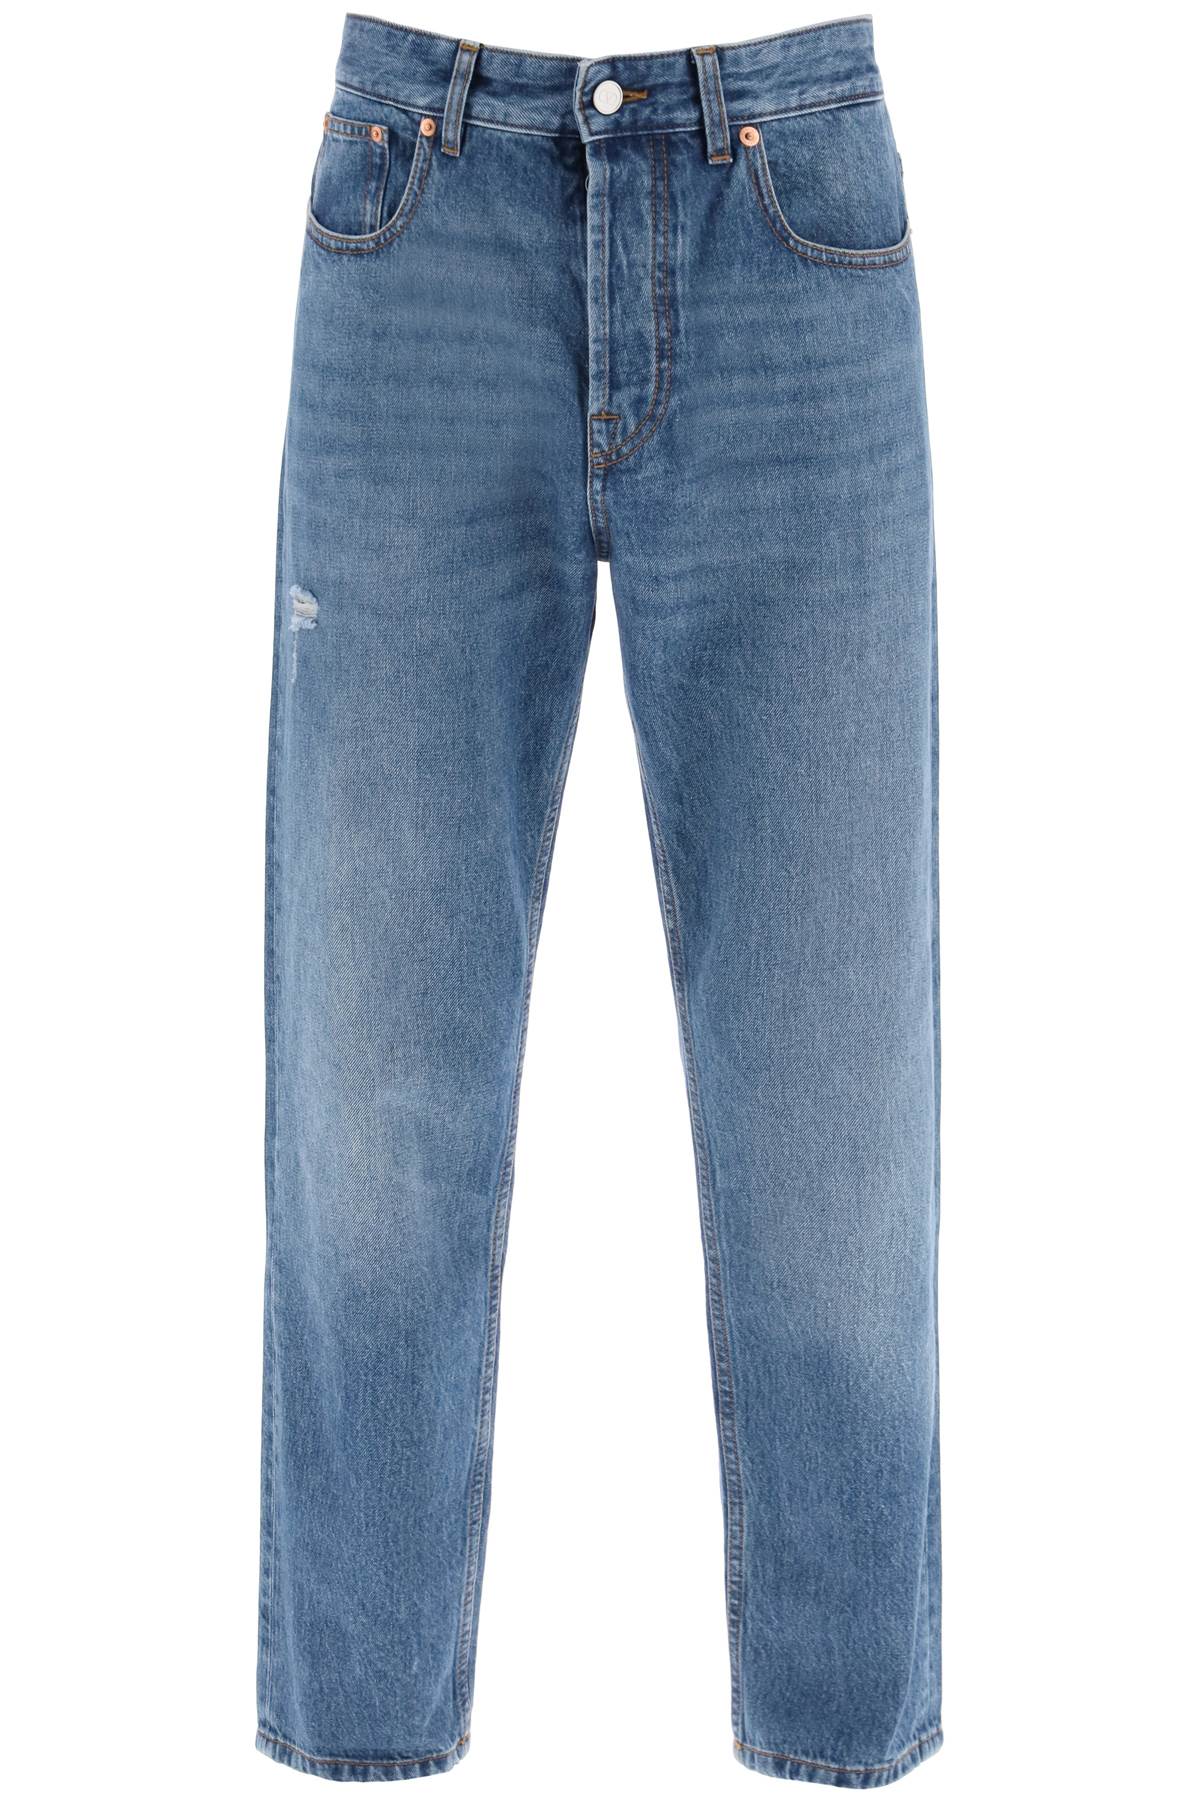 Valentino Garavani tapered-leg cotton jeans - Blue